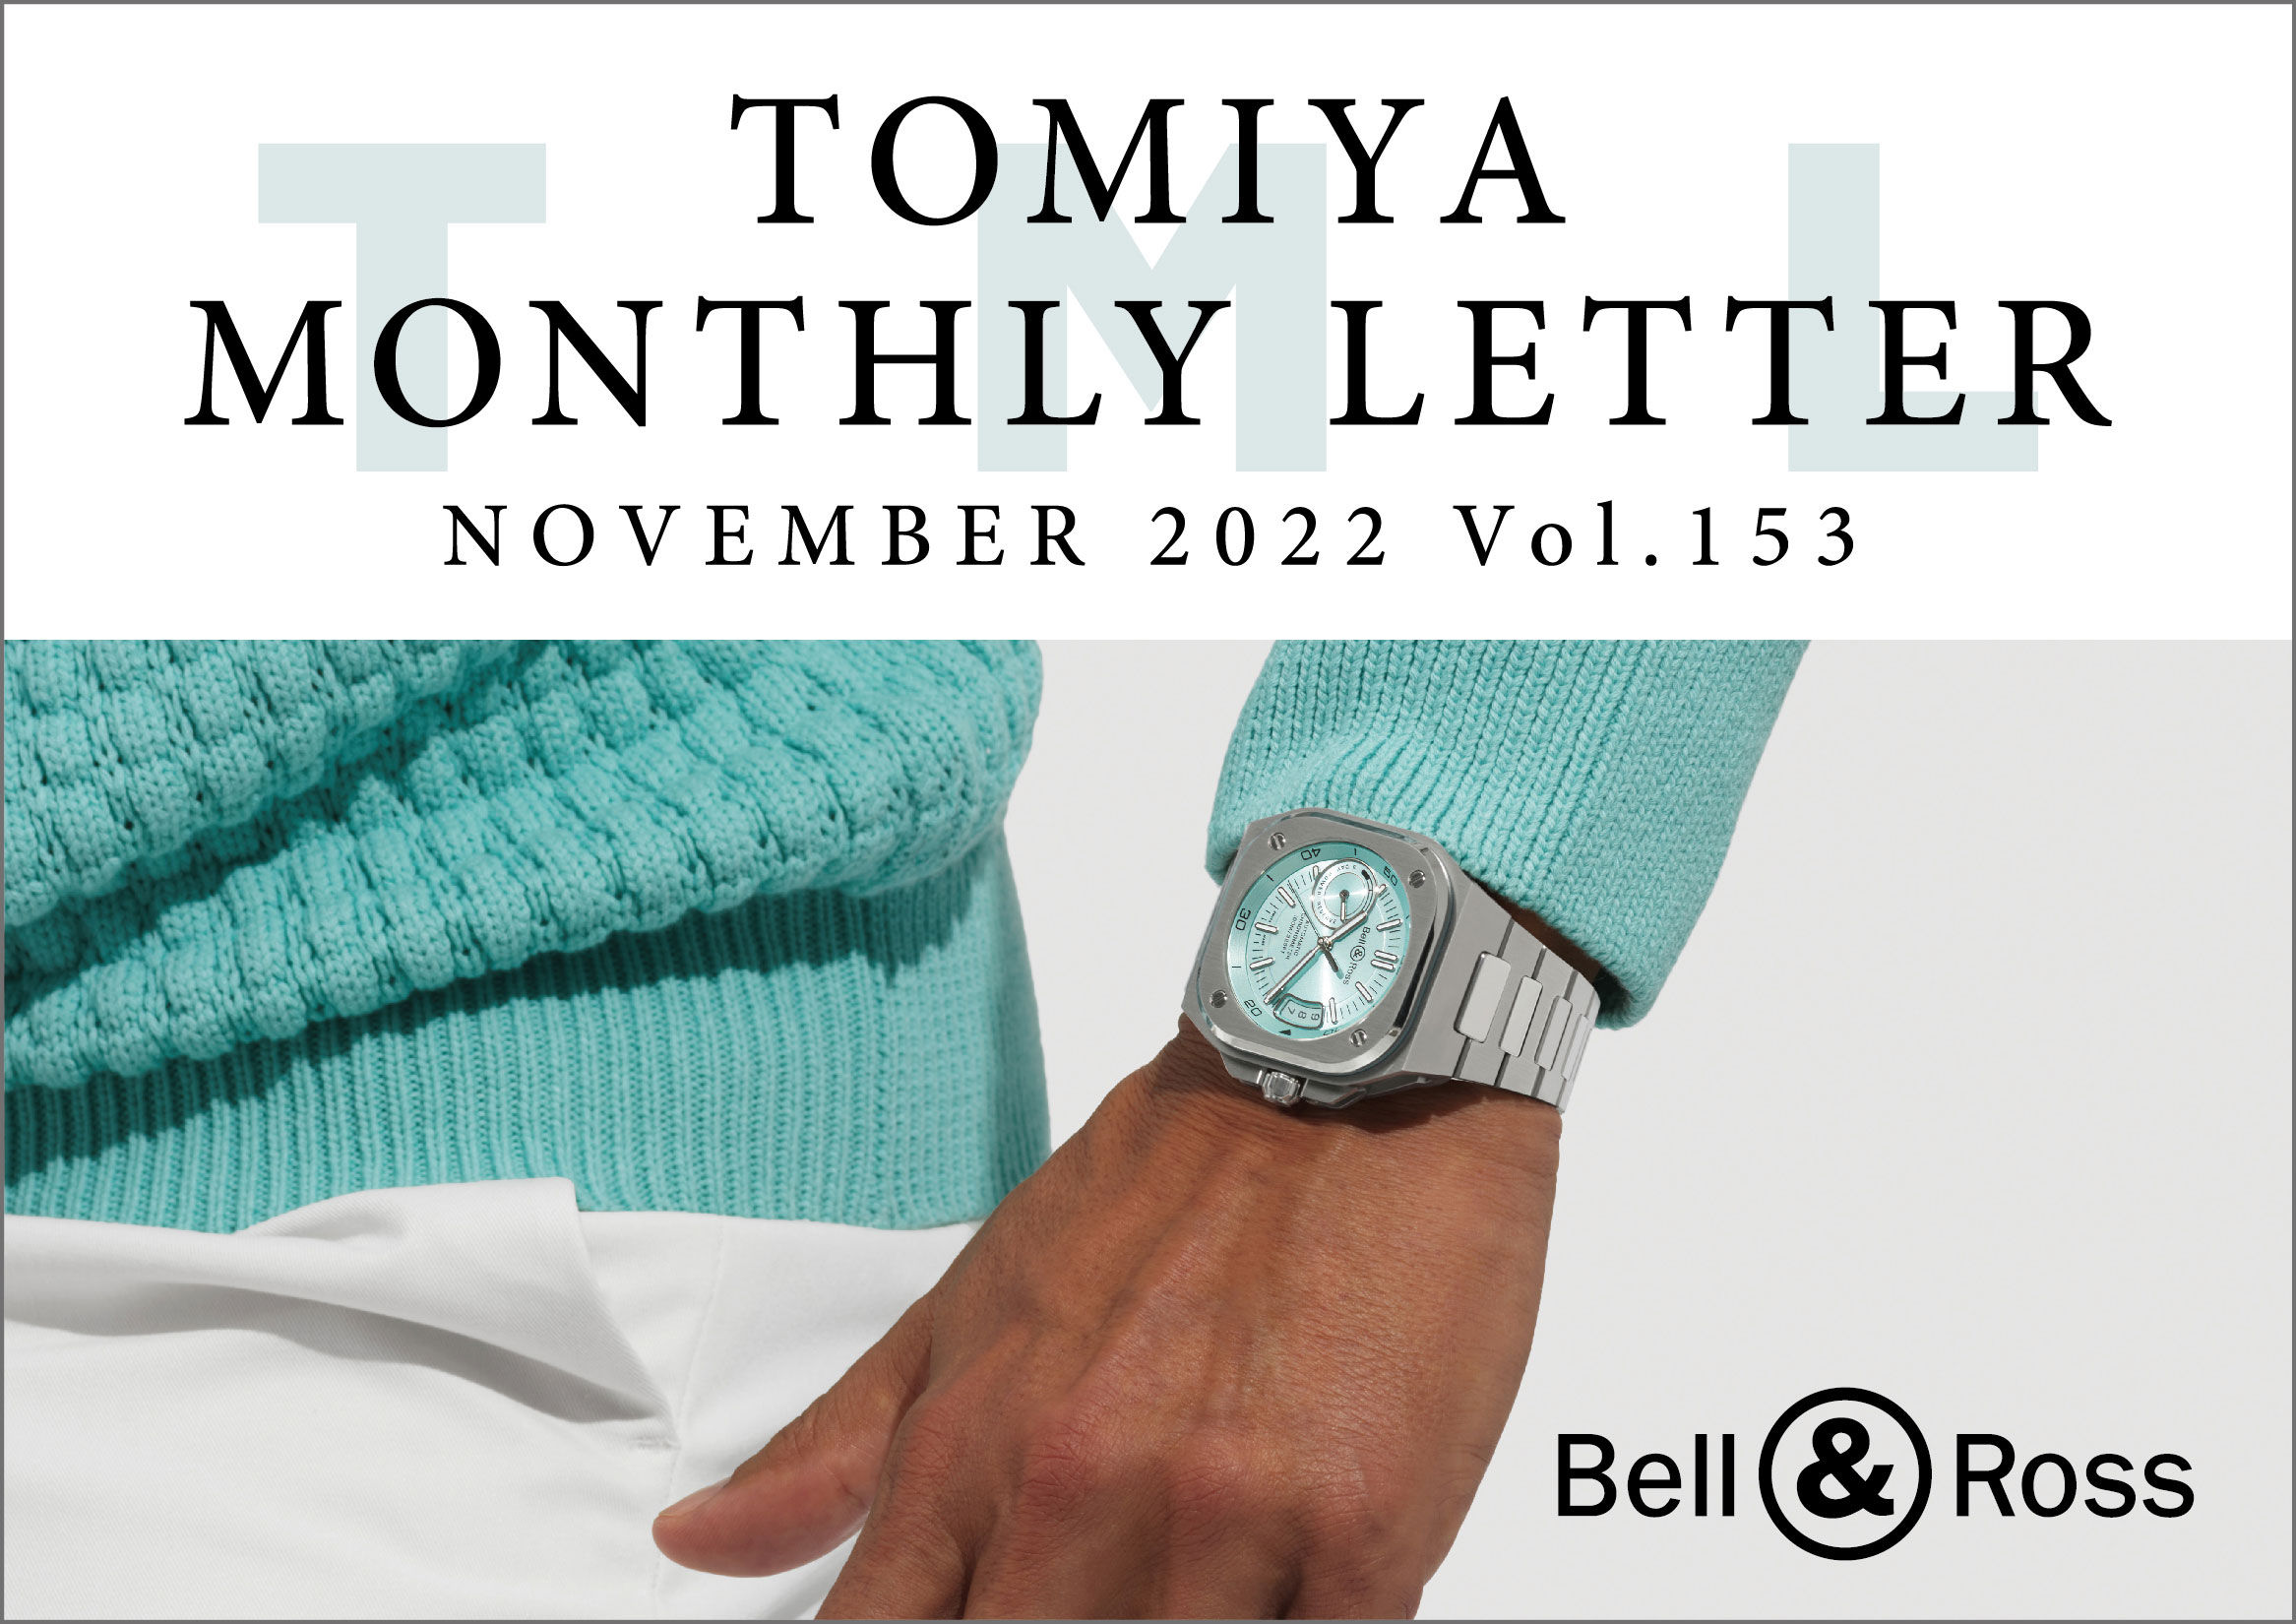 TOMIYA MONTHLY LETTER Vol.153